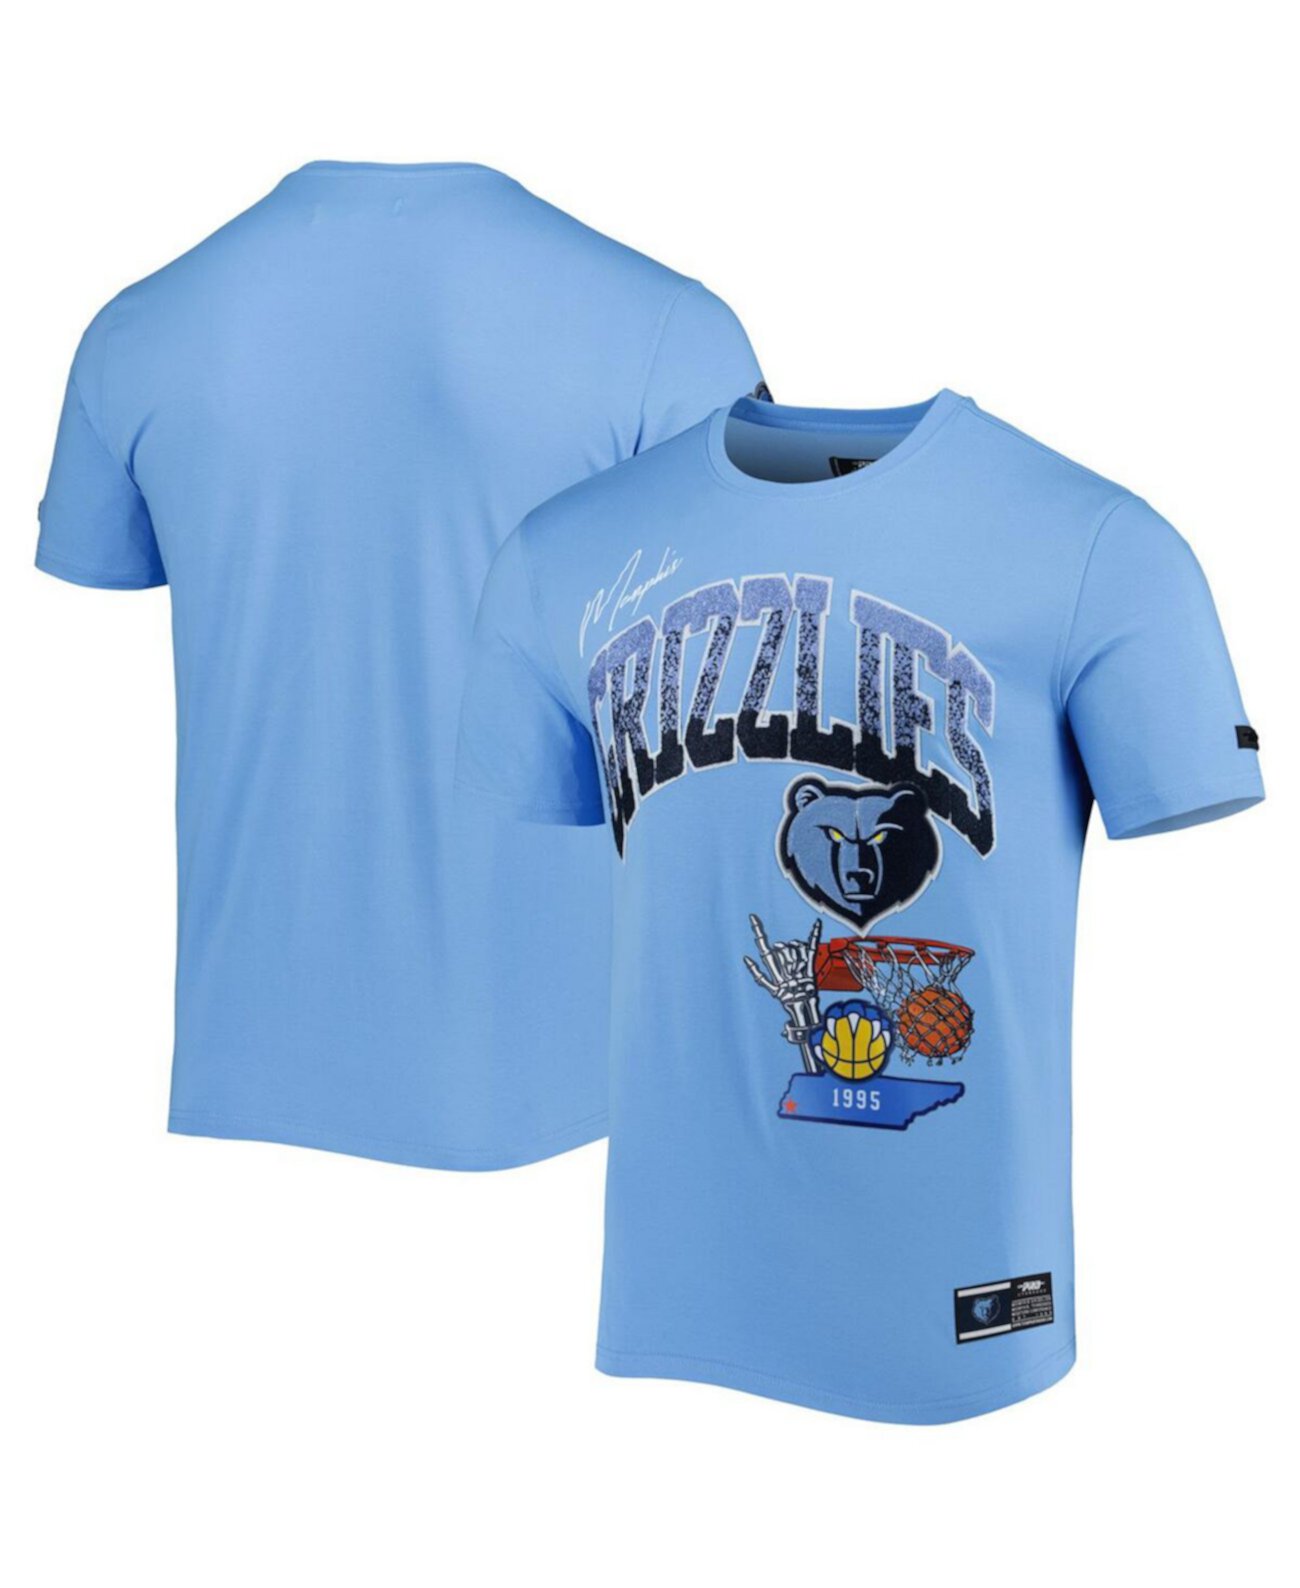 Мужская голубая футболка из синели Memphis Grizzlies Hometown Pro Standard